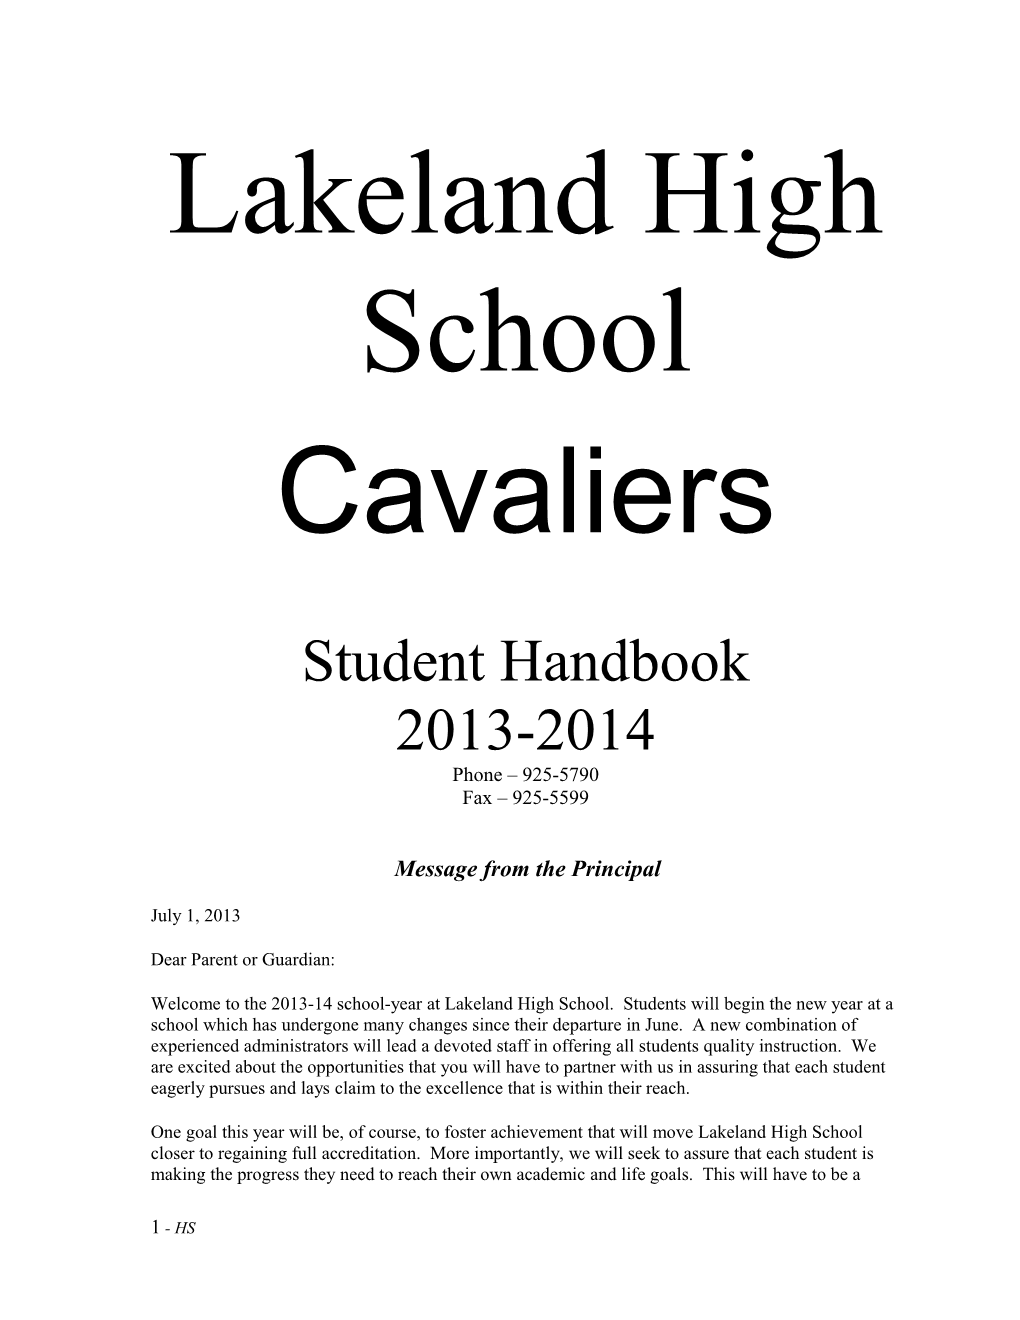 Student Handbook 13-14 - LHS Revised 1